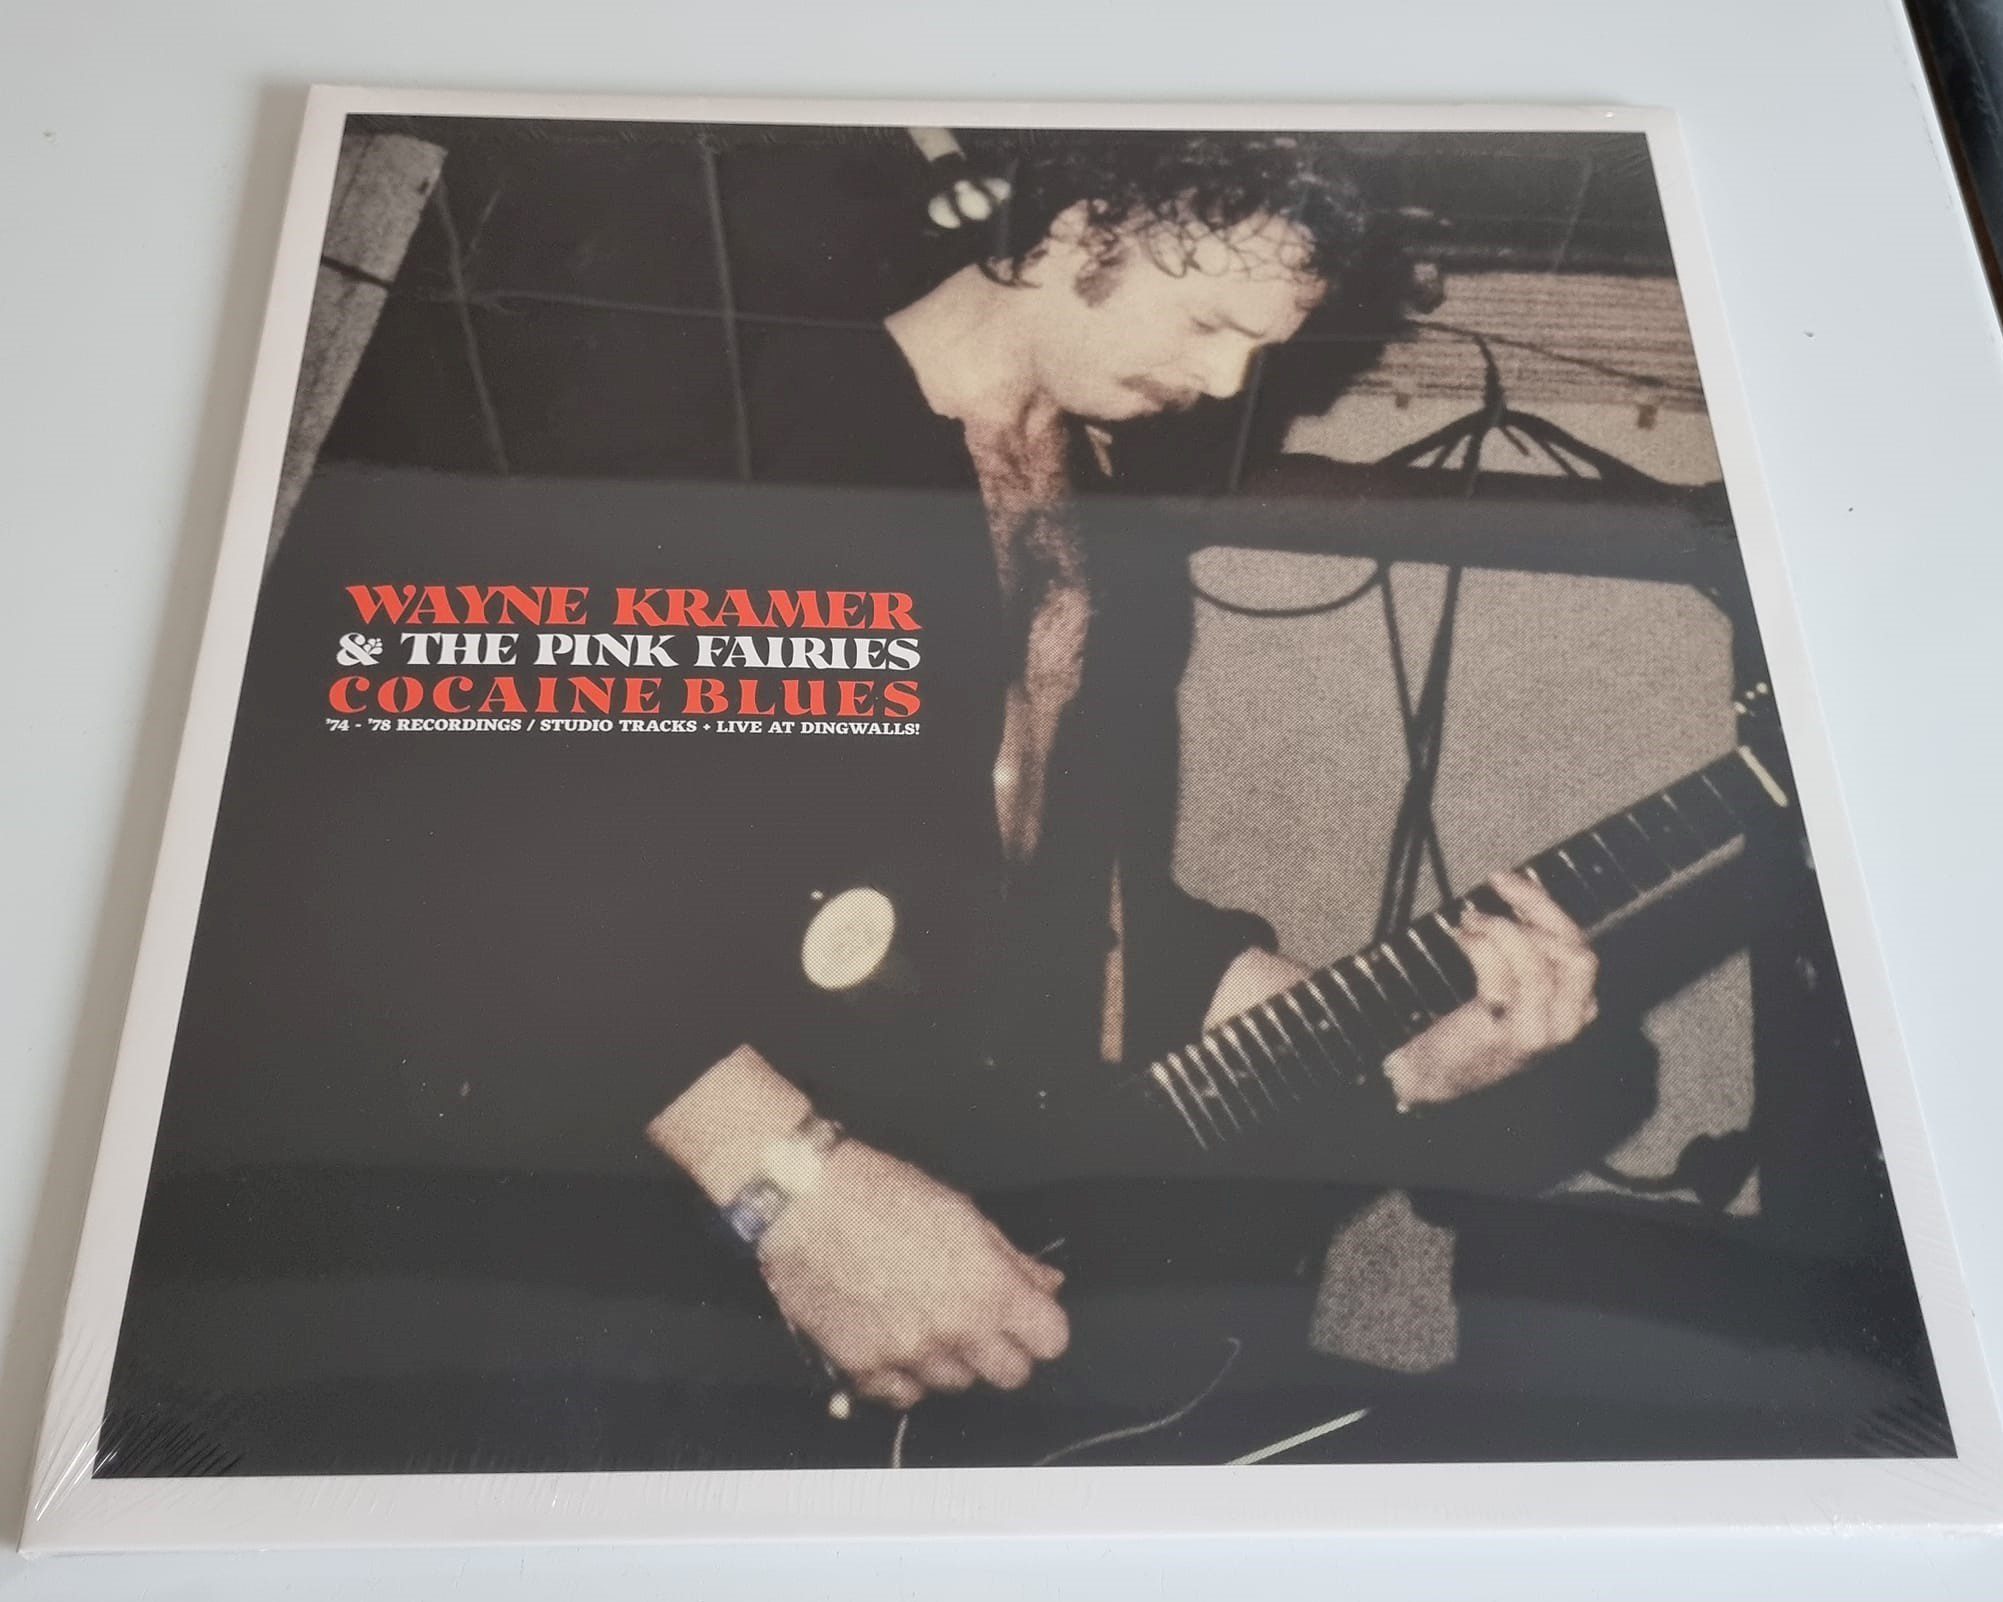 Buy this rare Wayne Kramer record by clicking here